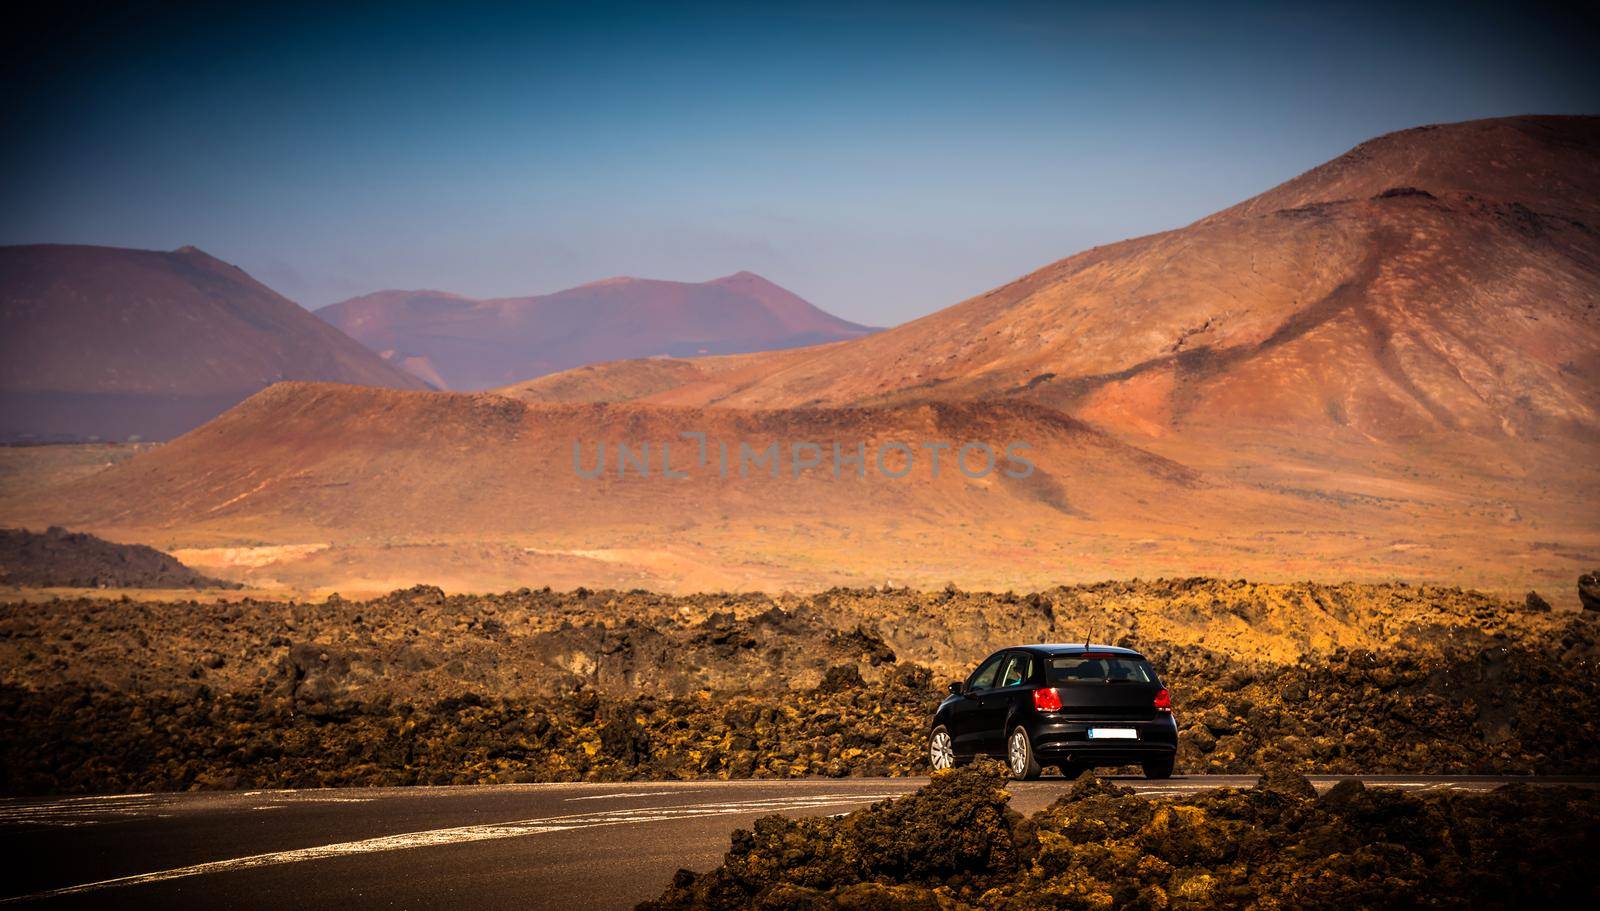 car on a mountain road by GekaSkr